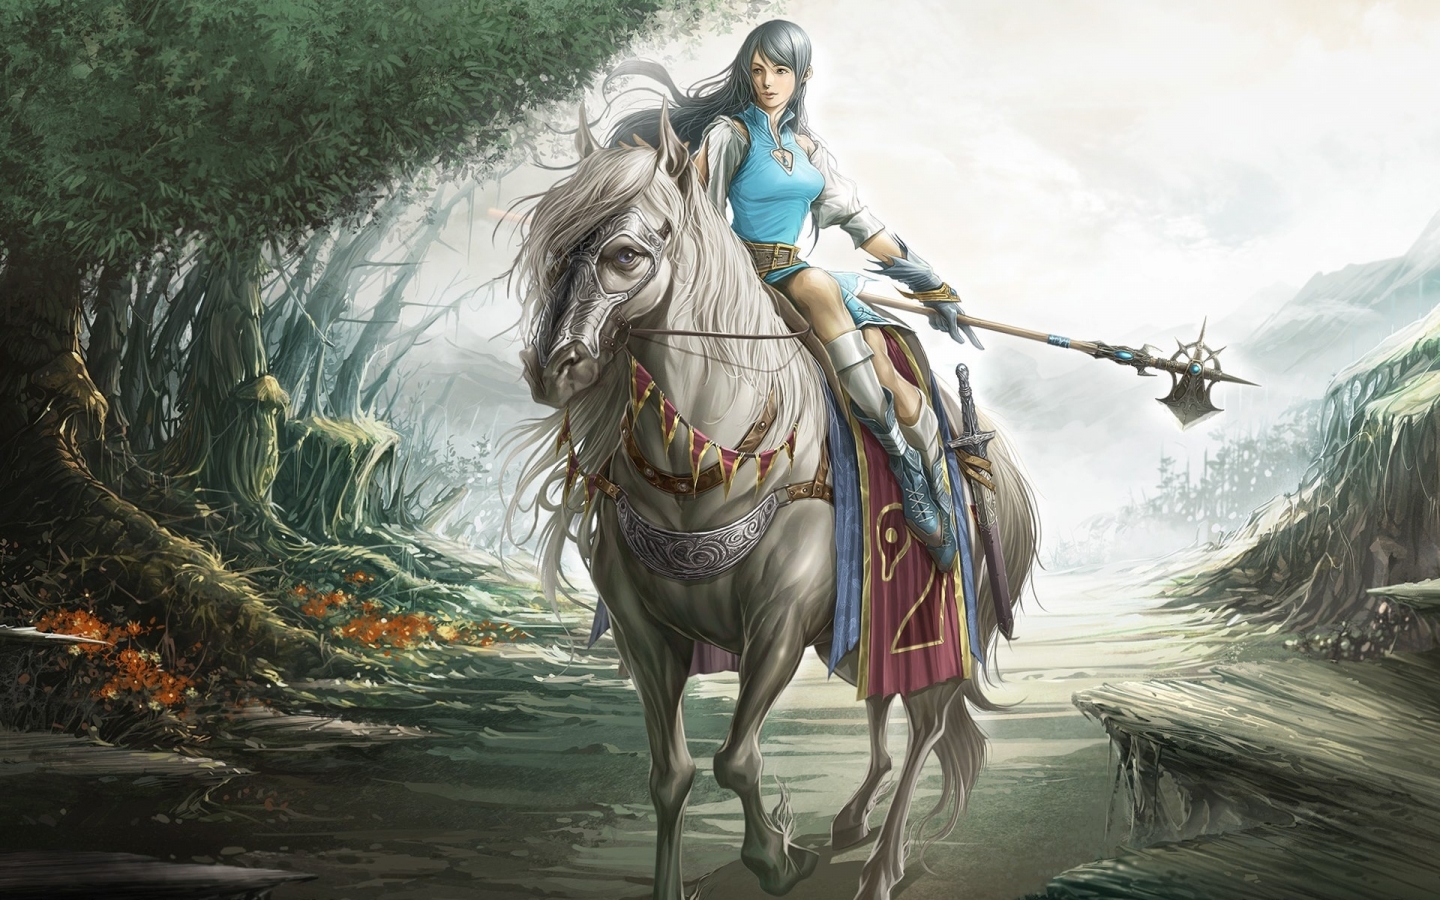 Fantasy Girl Rider for 1440 x 900 widescreen resolution